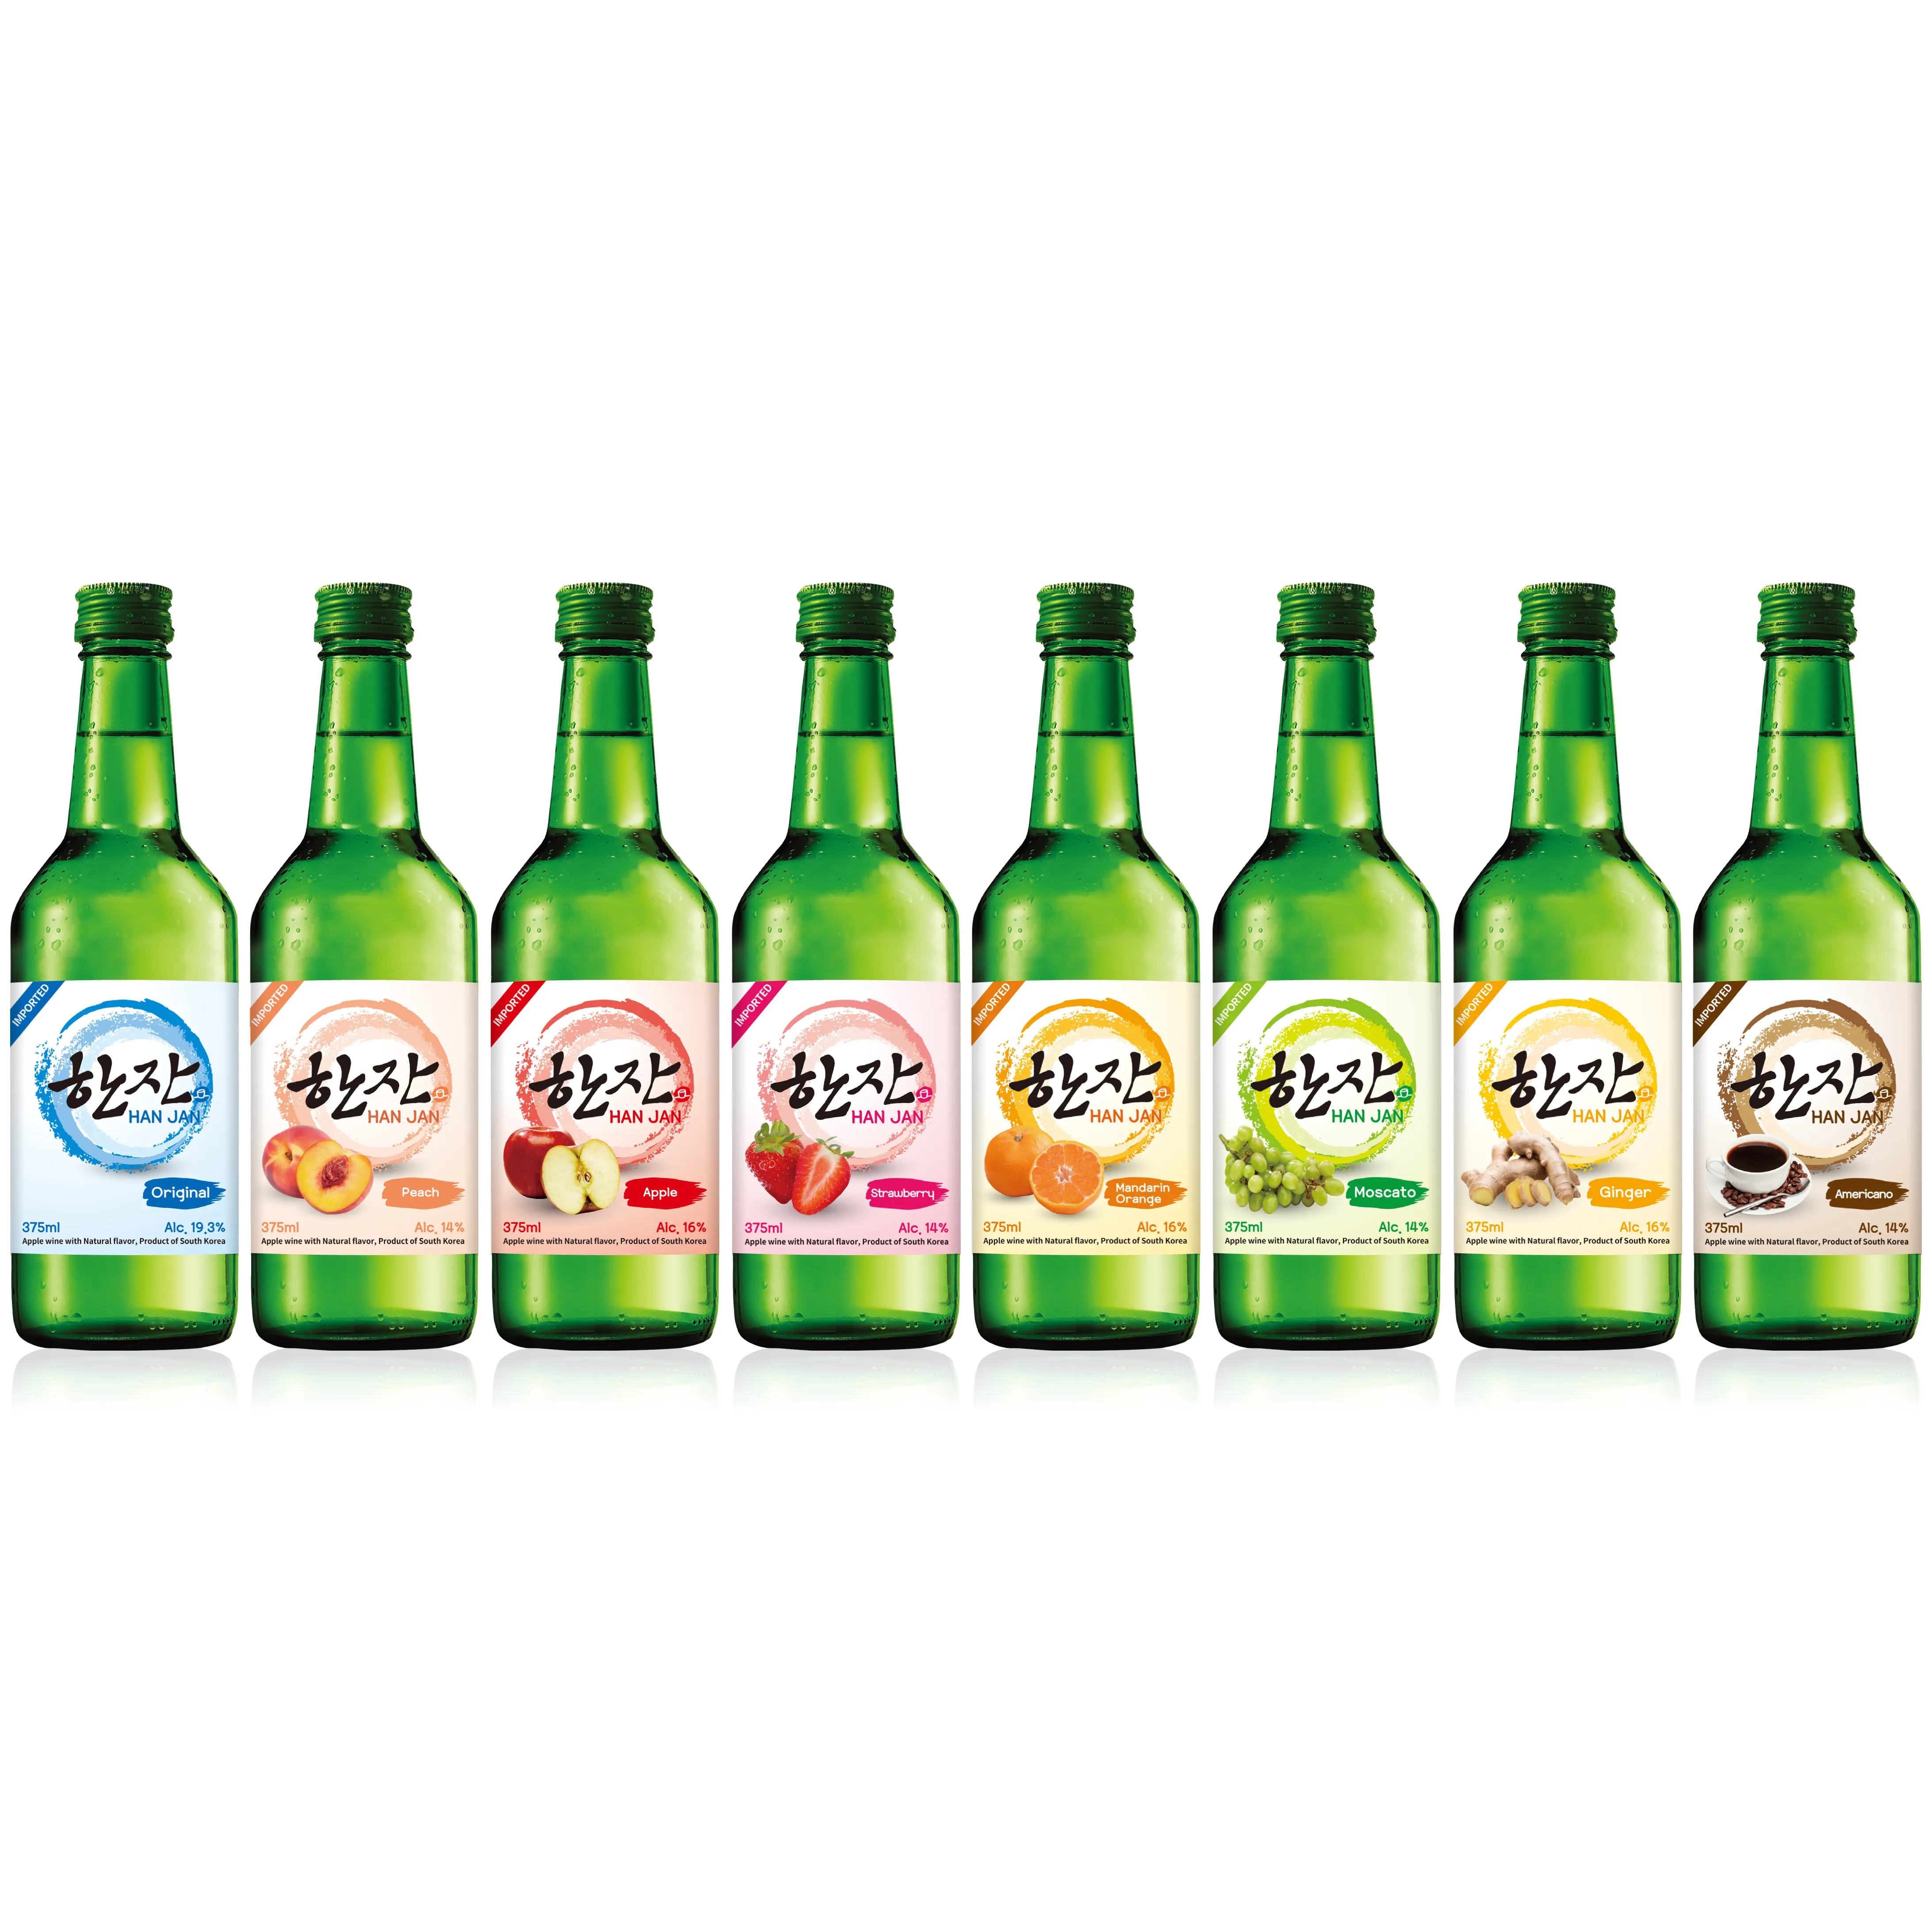 HanJan, Soju, फल-स्वाद कोरियाई शराब, एप्पल शराब, 375ml